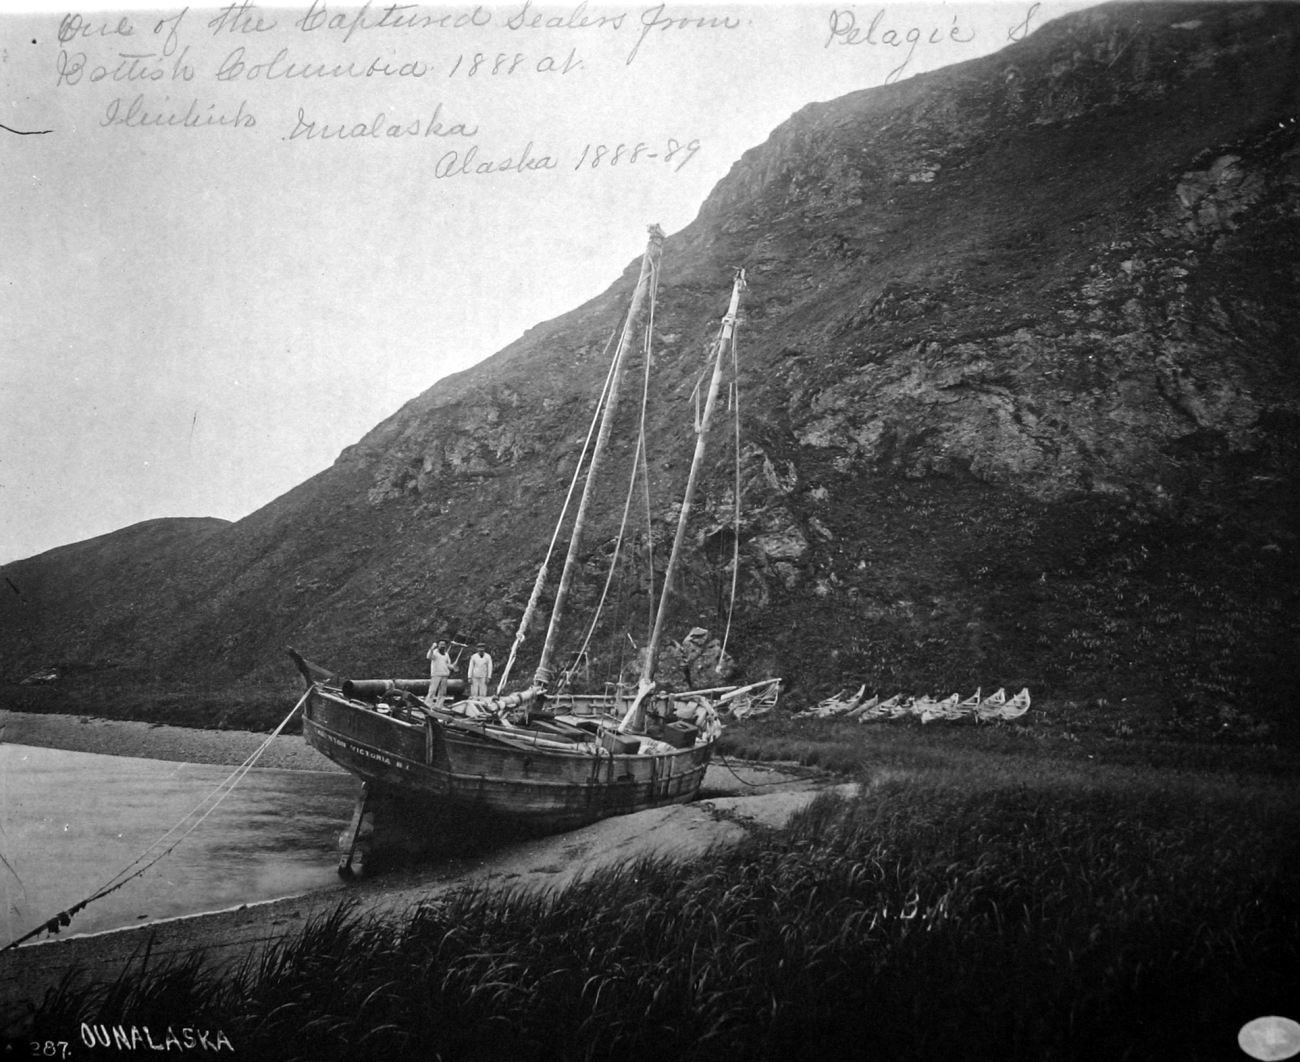 One of the captured sealers from British Columbia 1888 at Iliukiuk,Unalaska, AK, 1888-89